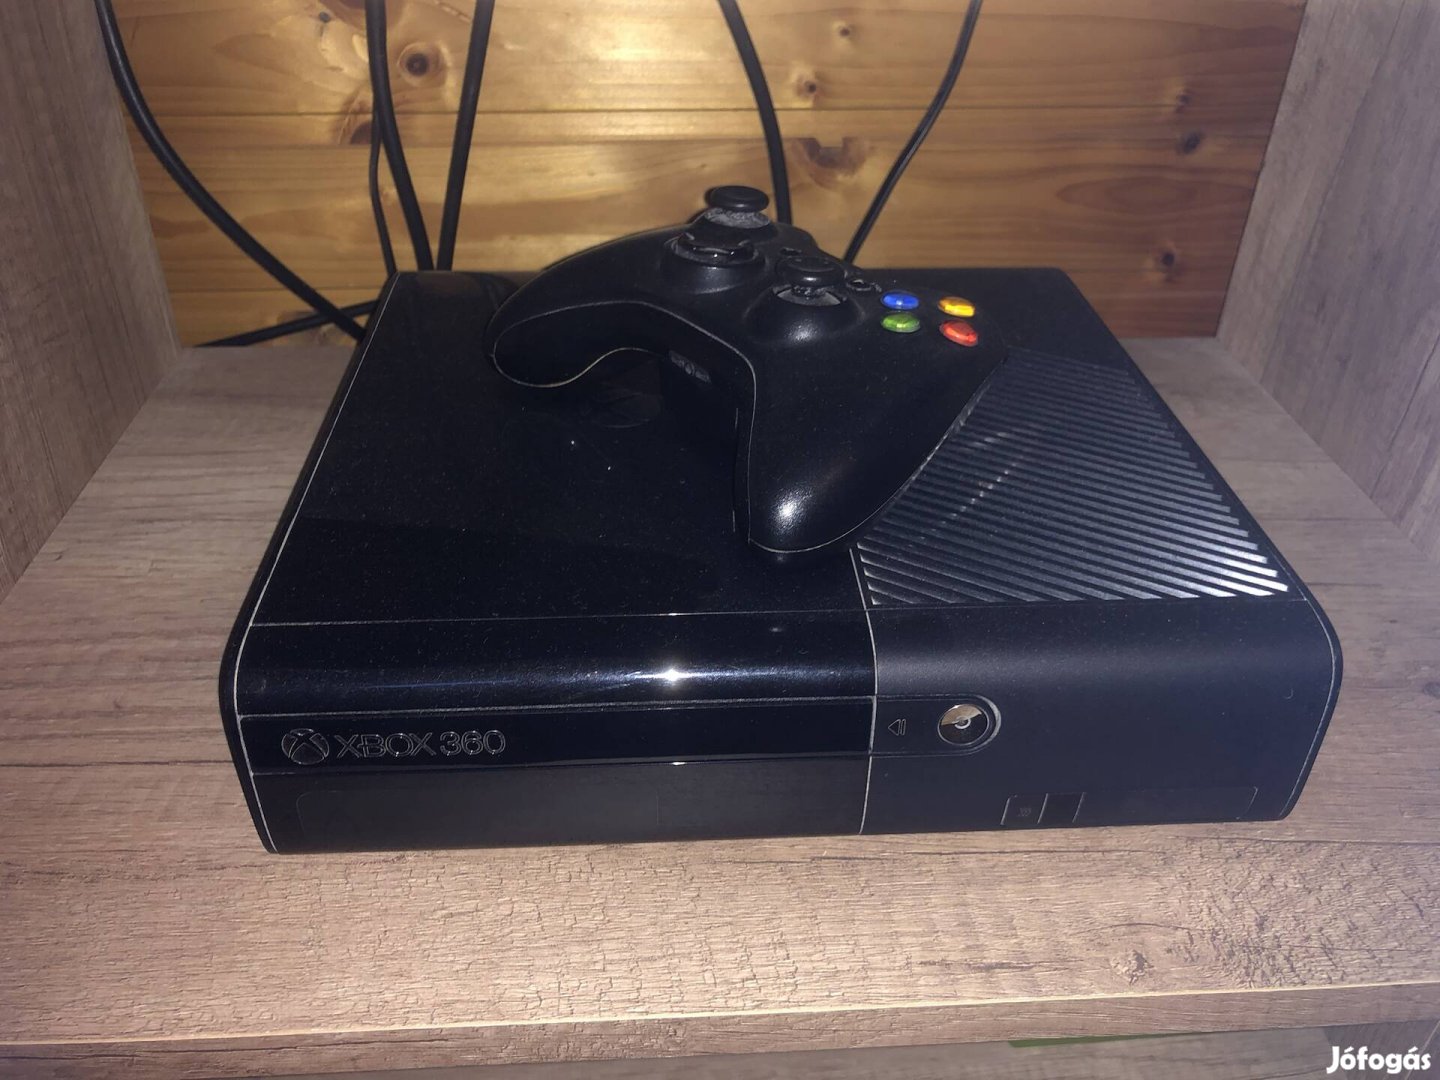 Xbox360 500gb